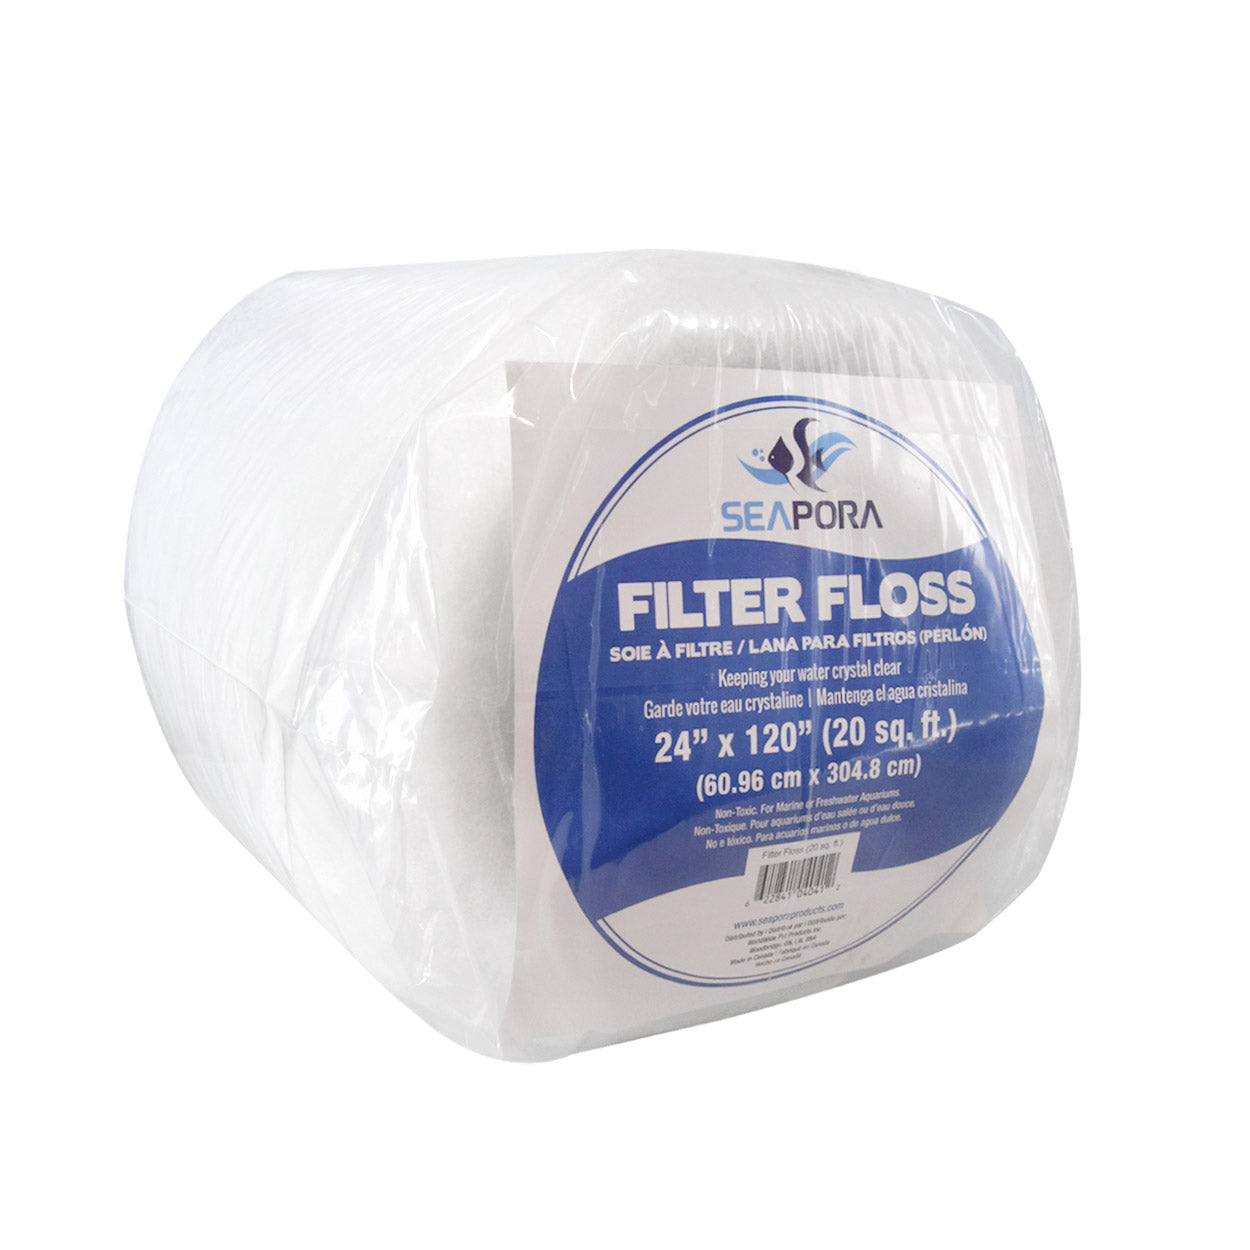 Seapora Filter Floss Bulk